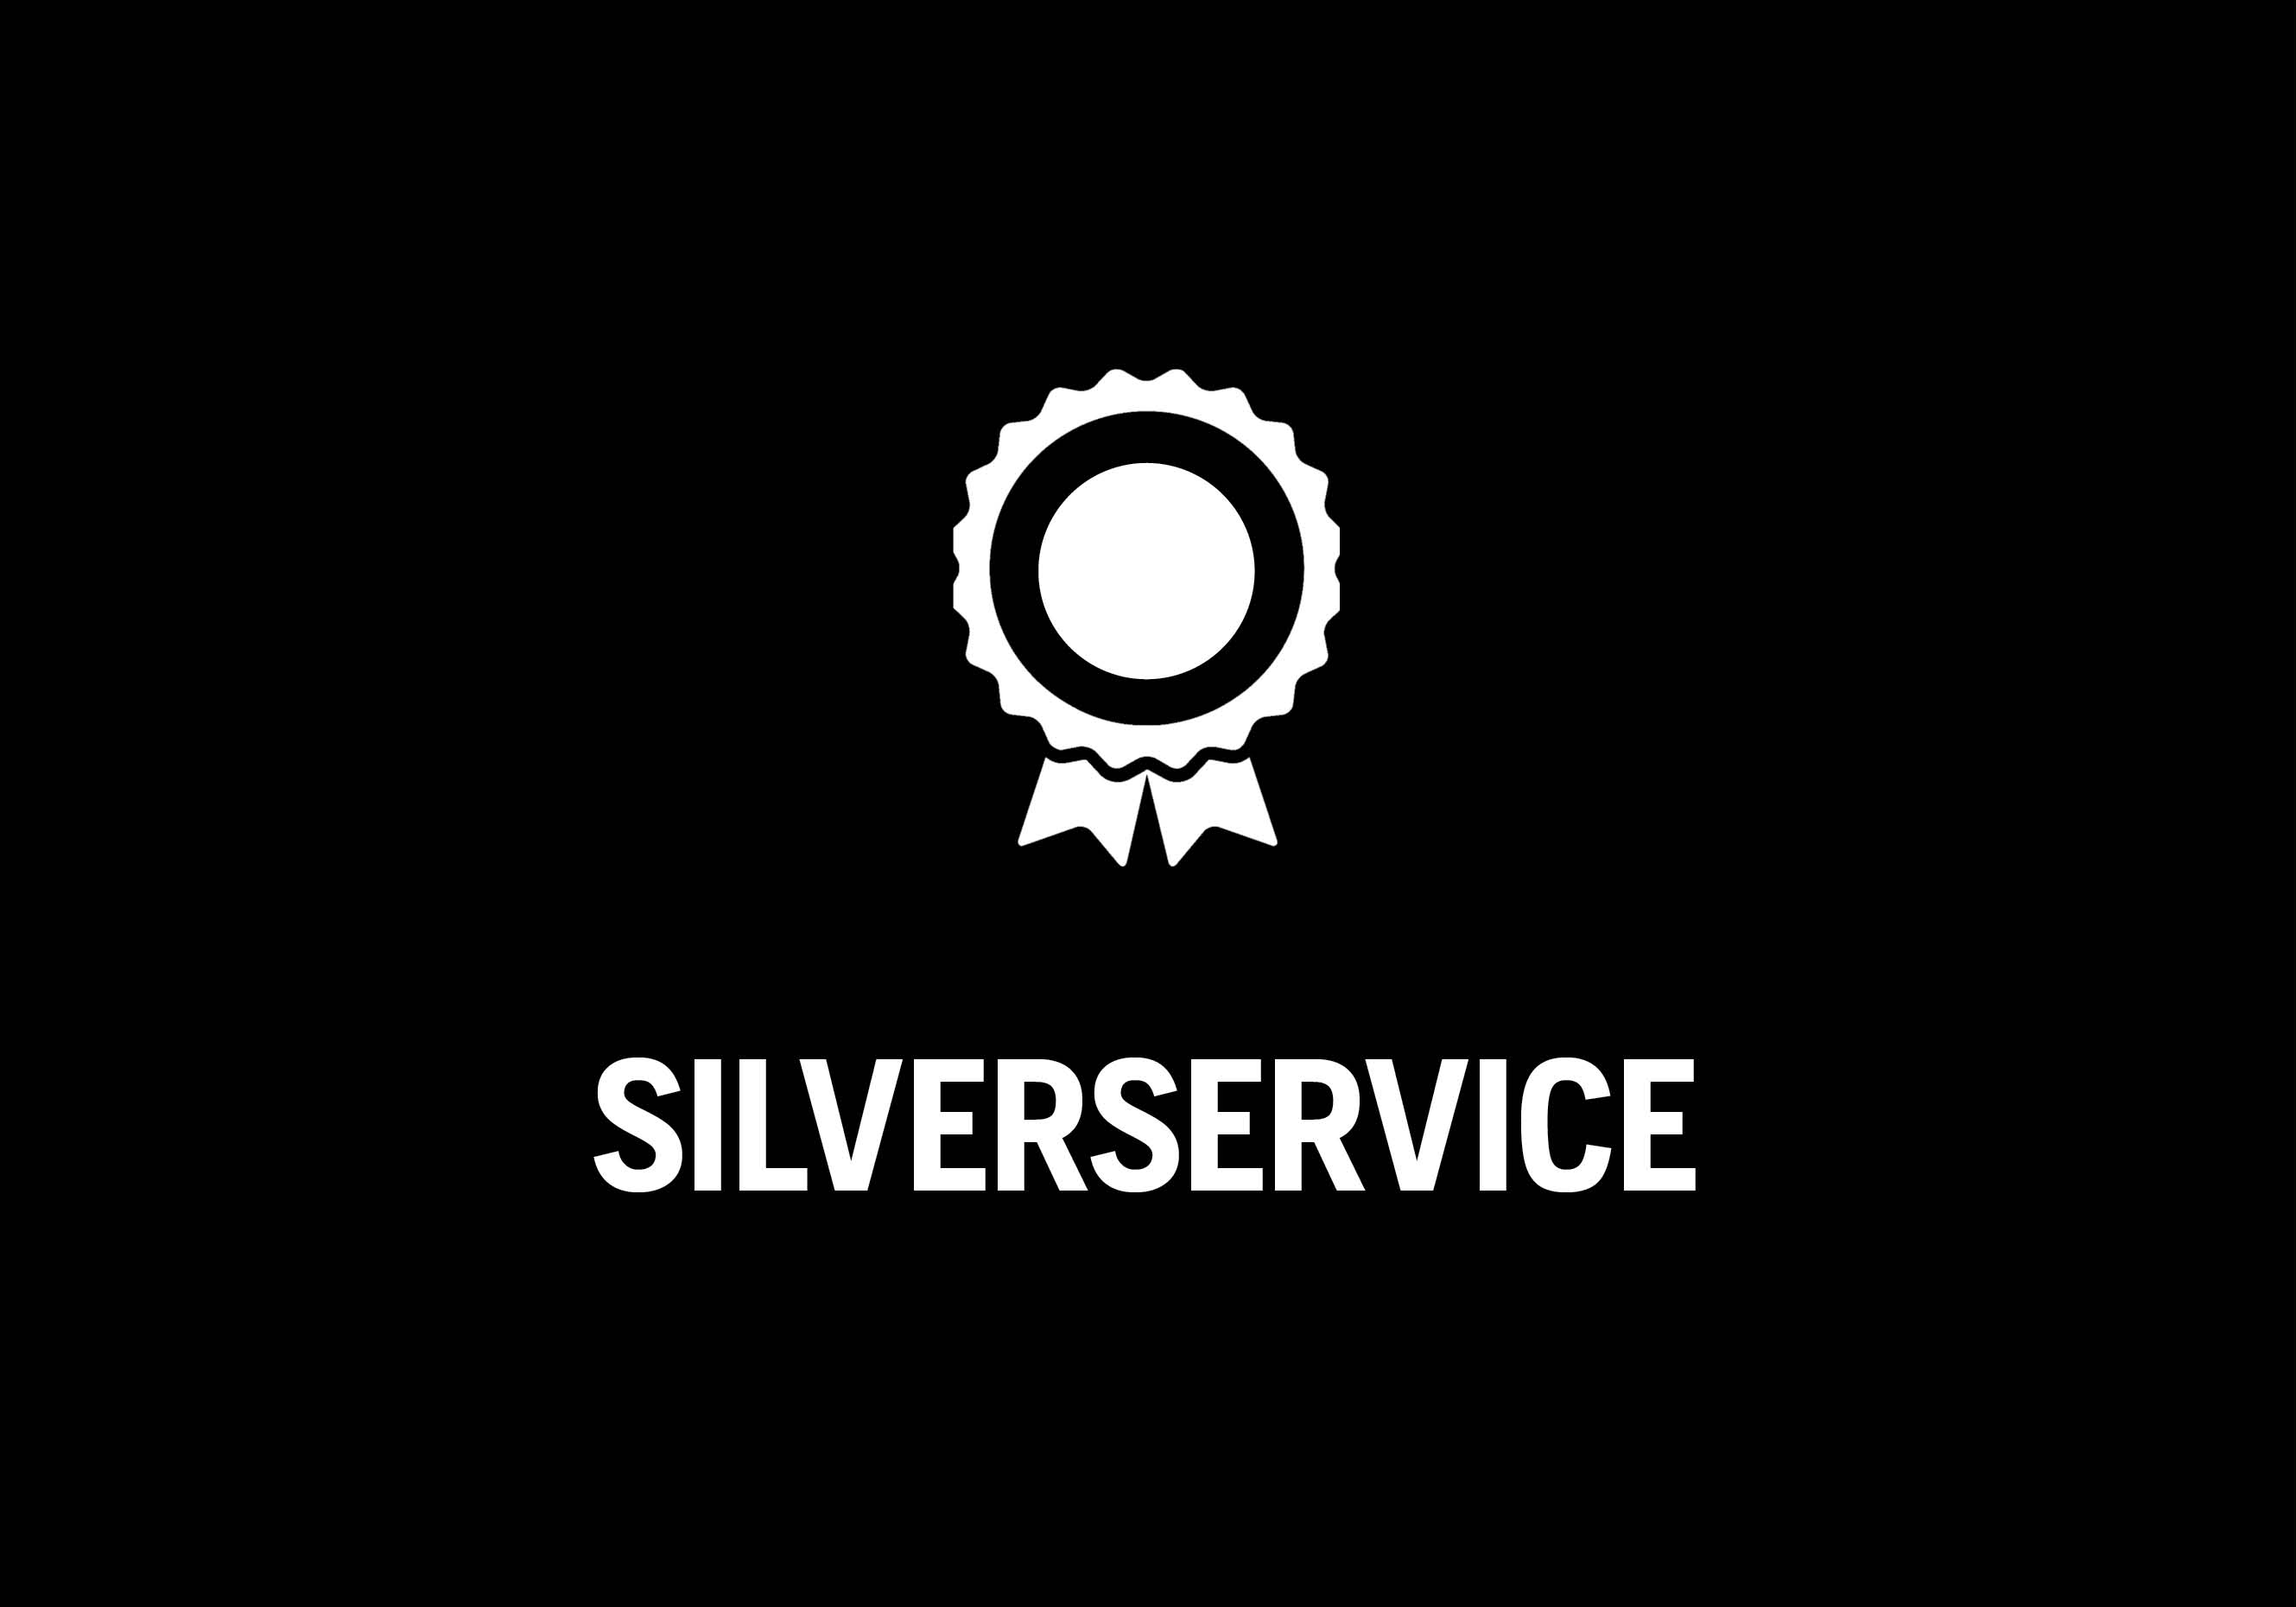 Silverservice